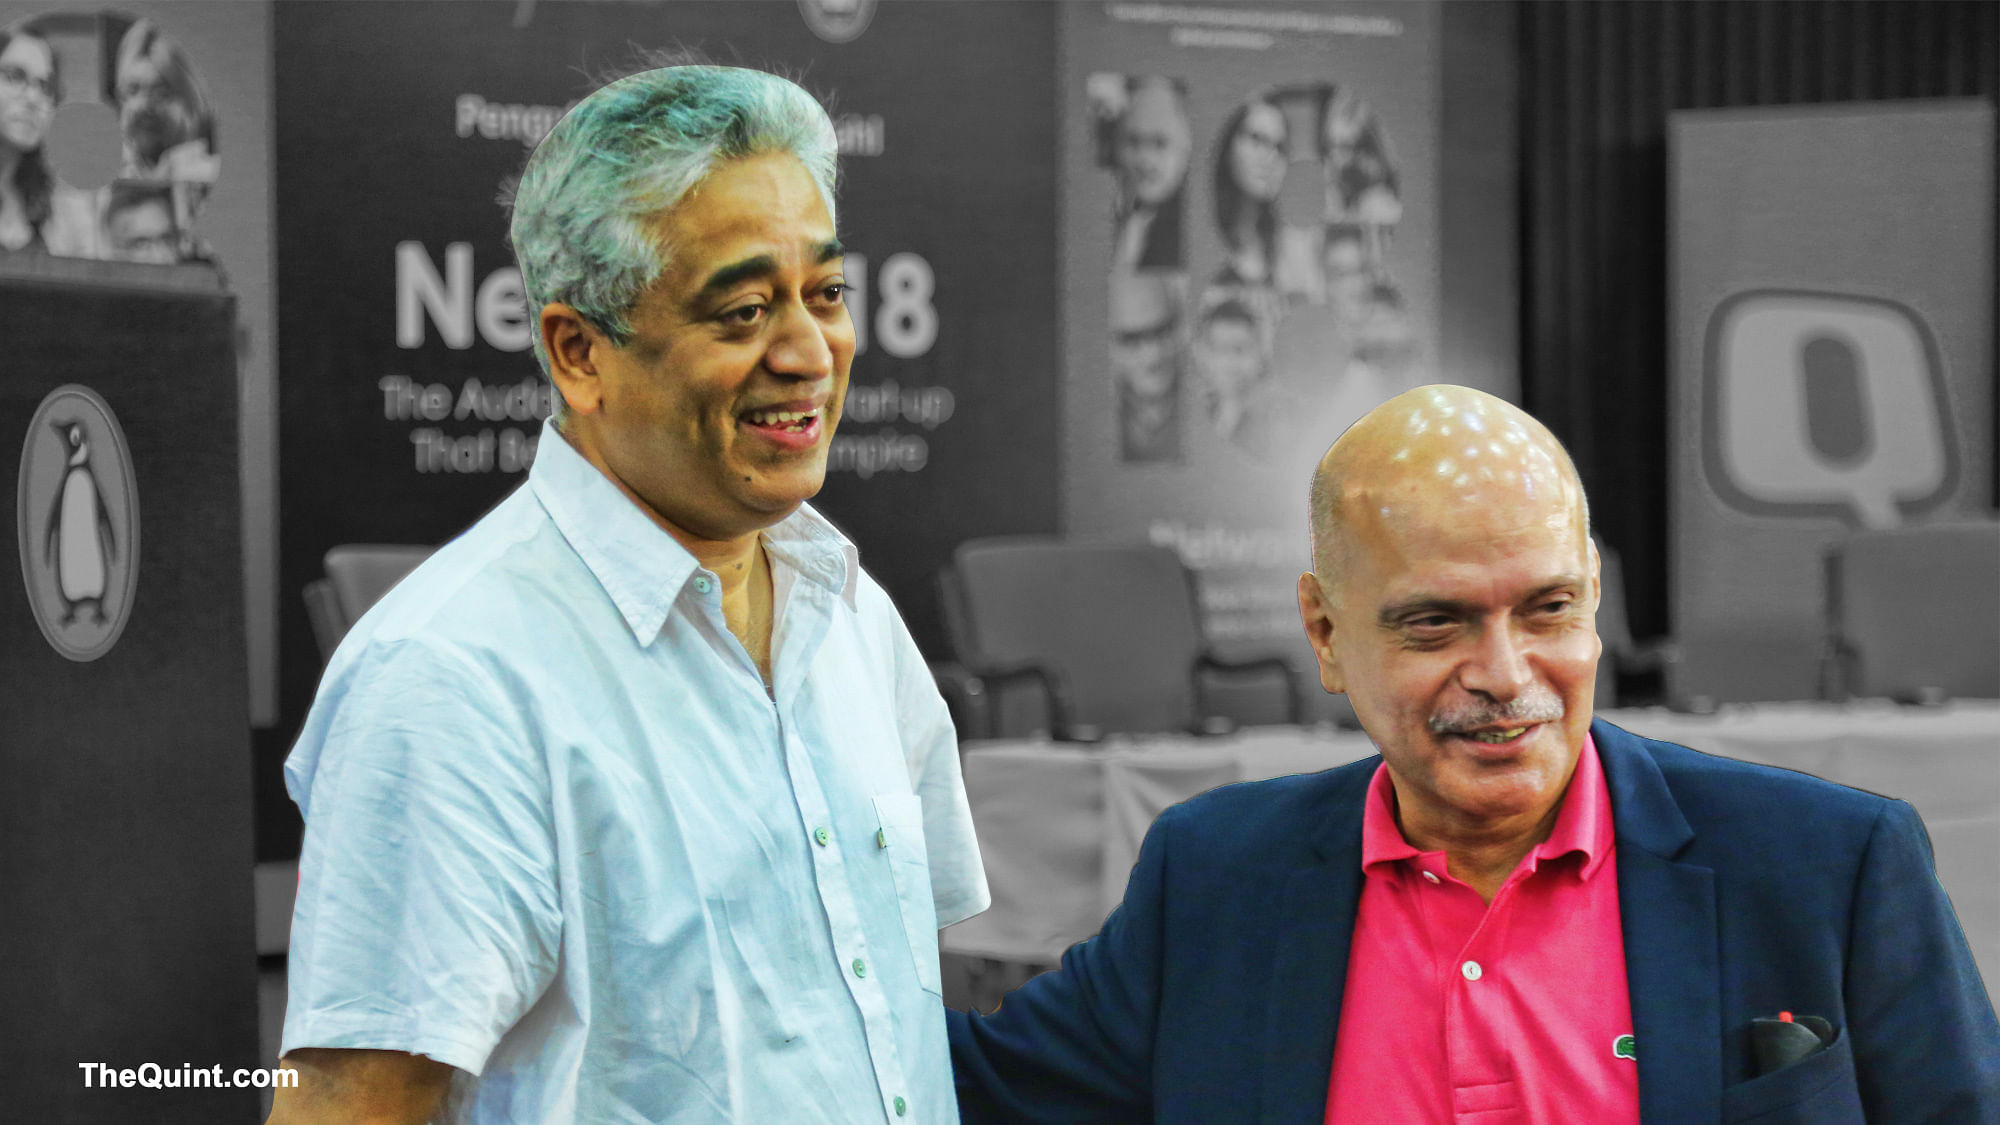 Rajdeep Sardesai and Raghav Bahl at the book launch (Photo: <b>The Quint</b>)